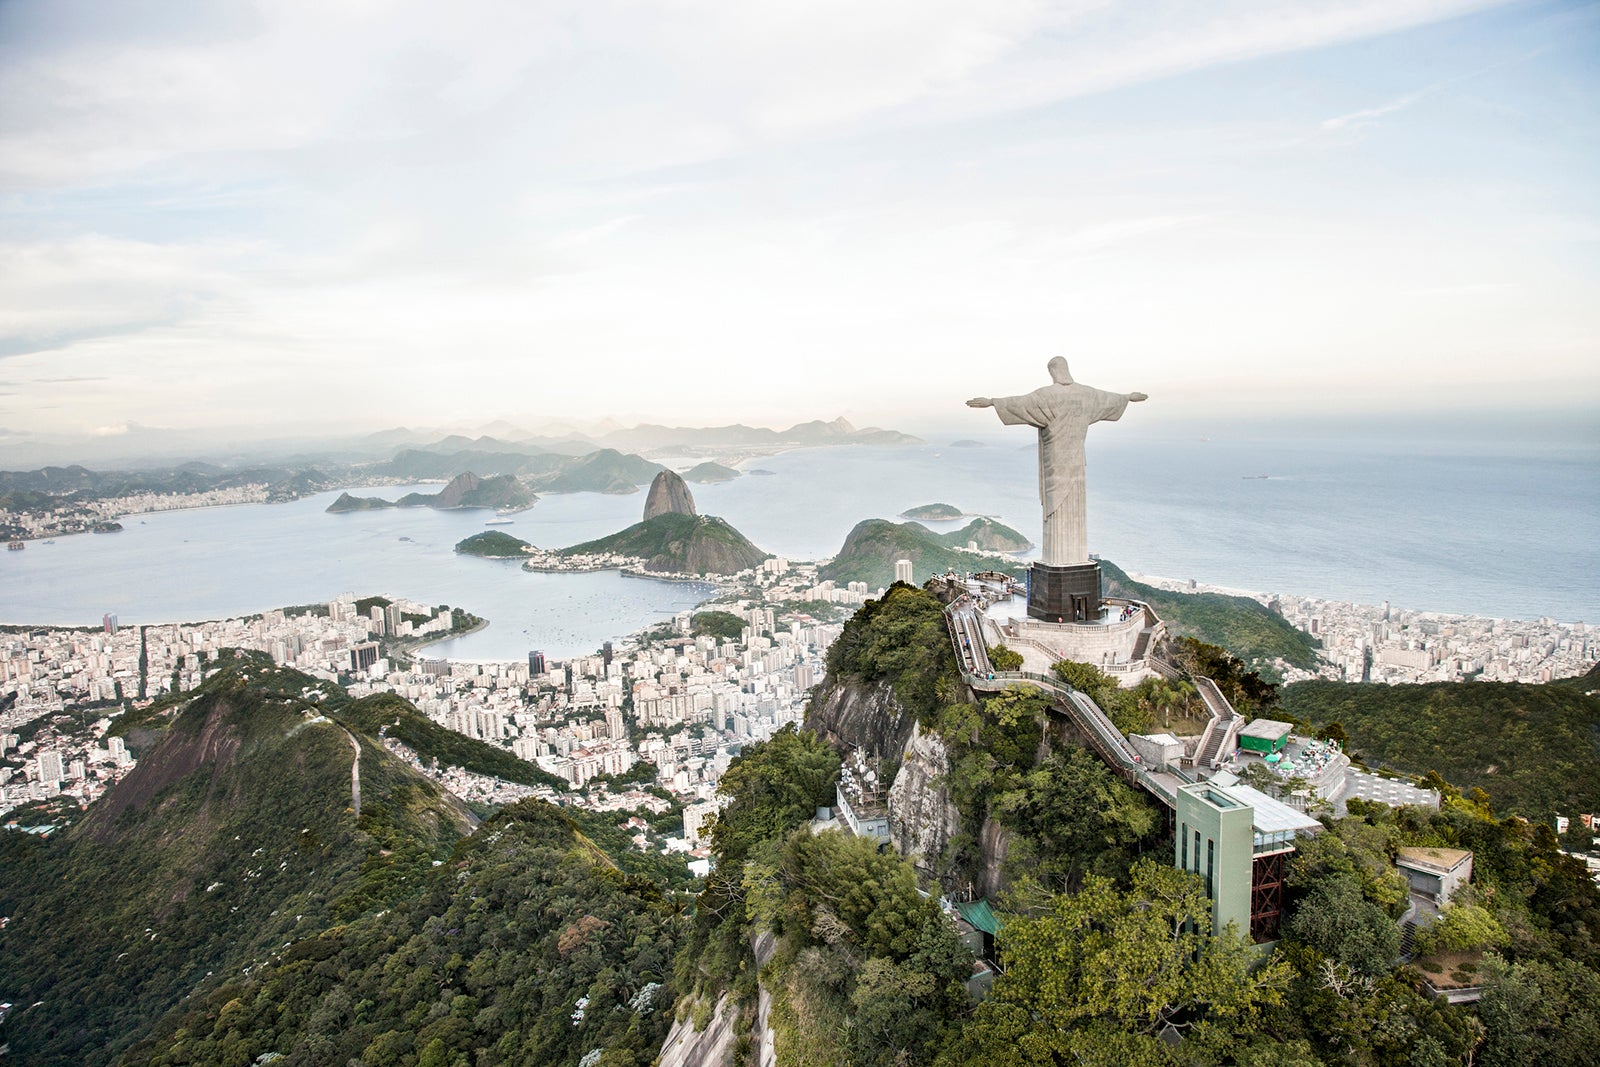 The famous Christ the Redeemer statue in Rio de Janeiro, Brazil